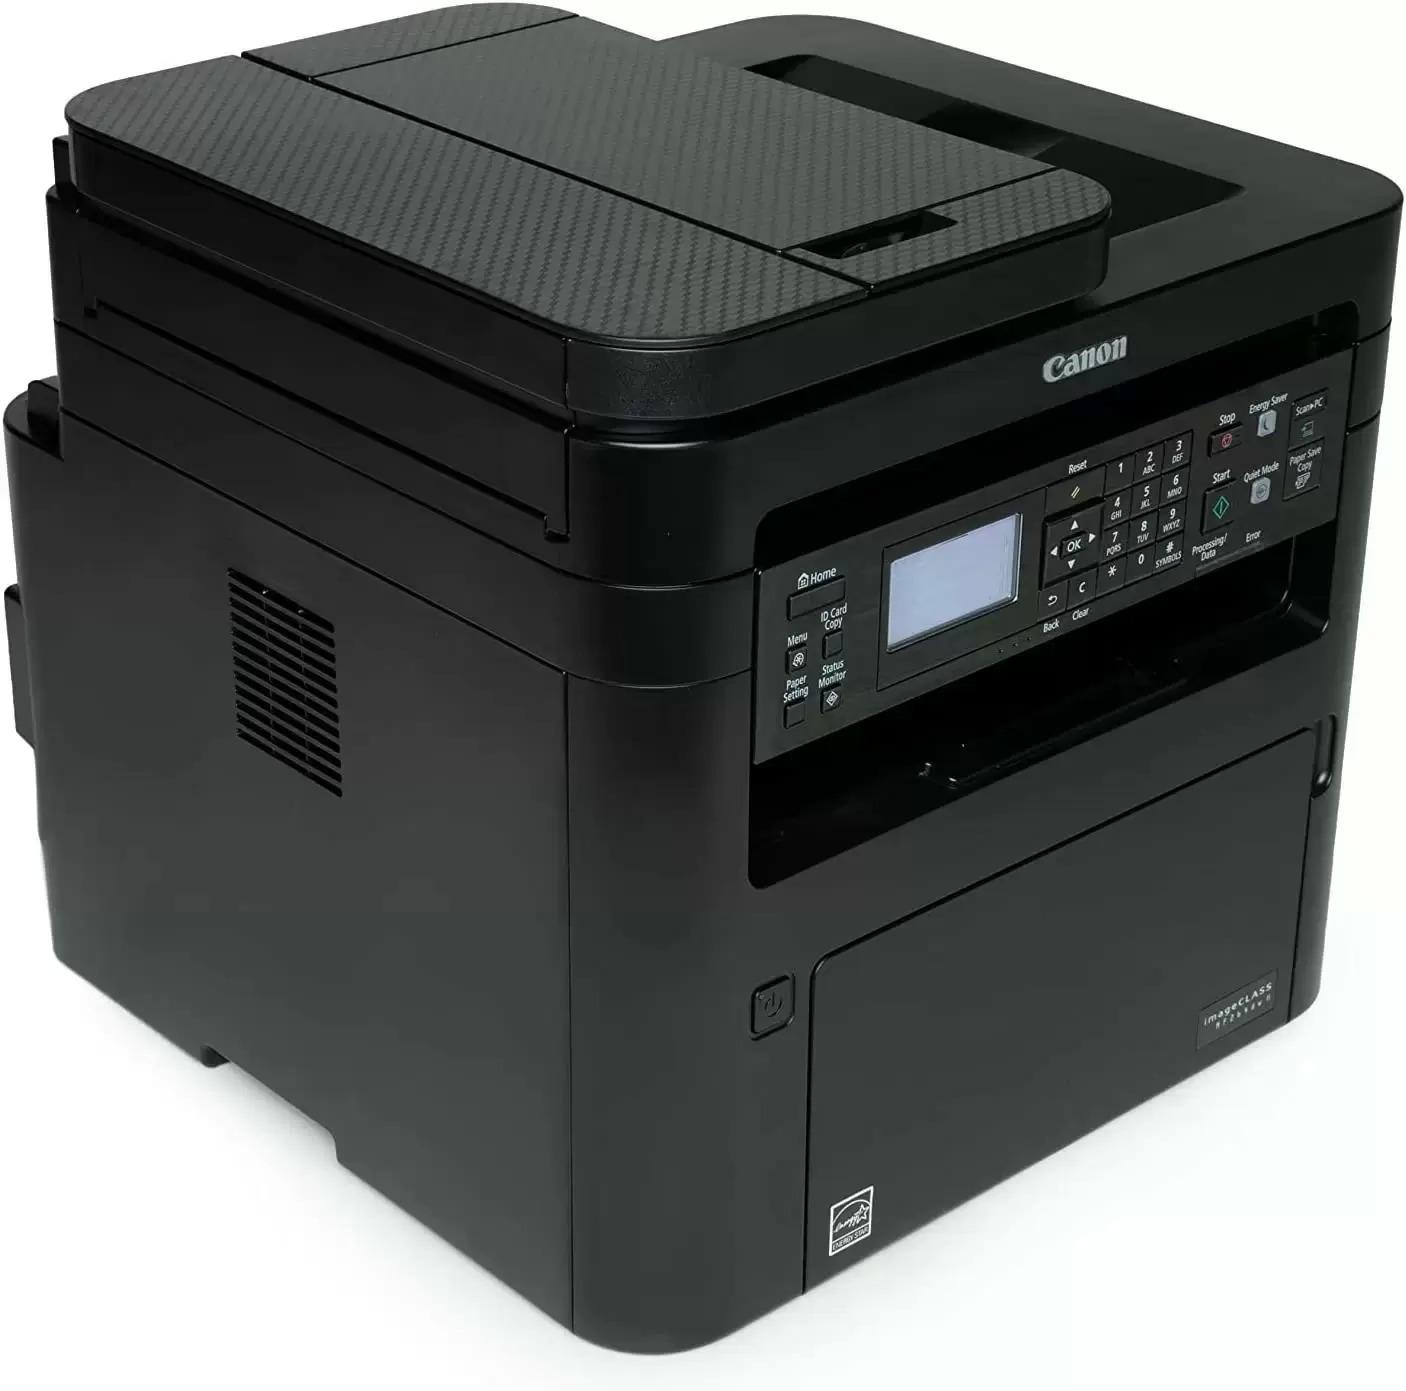 Canon imageCLASS MF264dw II Wireless Monochrome Laser Printer for $149.99 Shipped